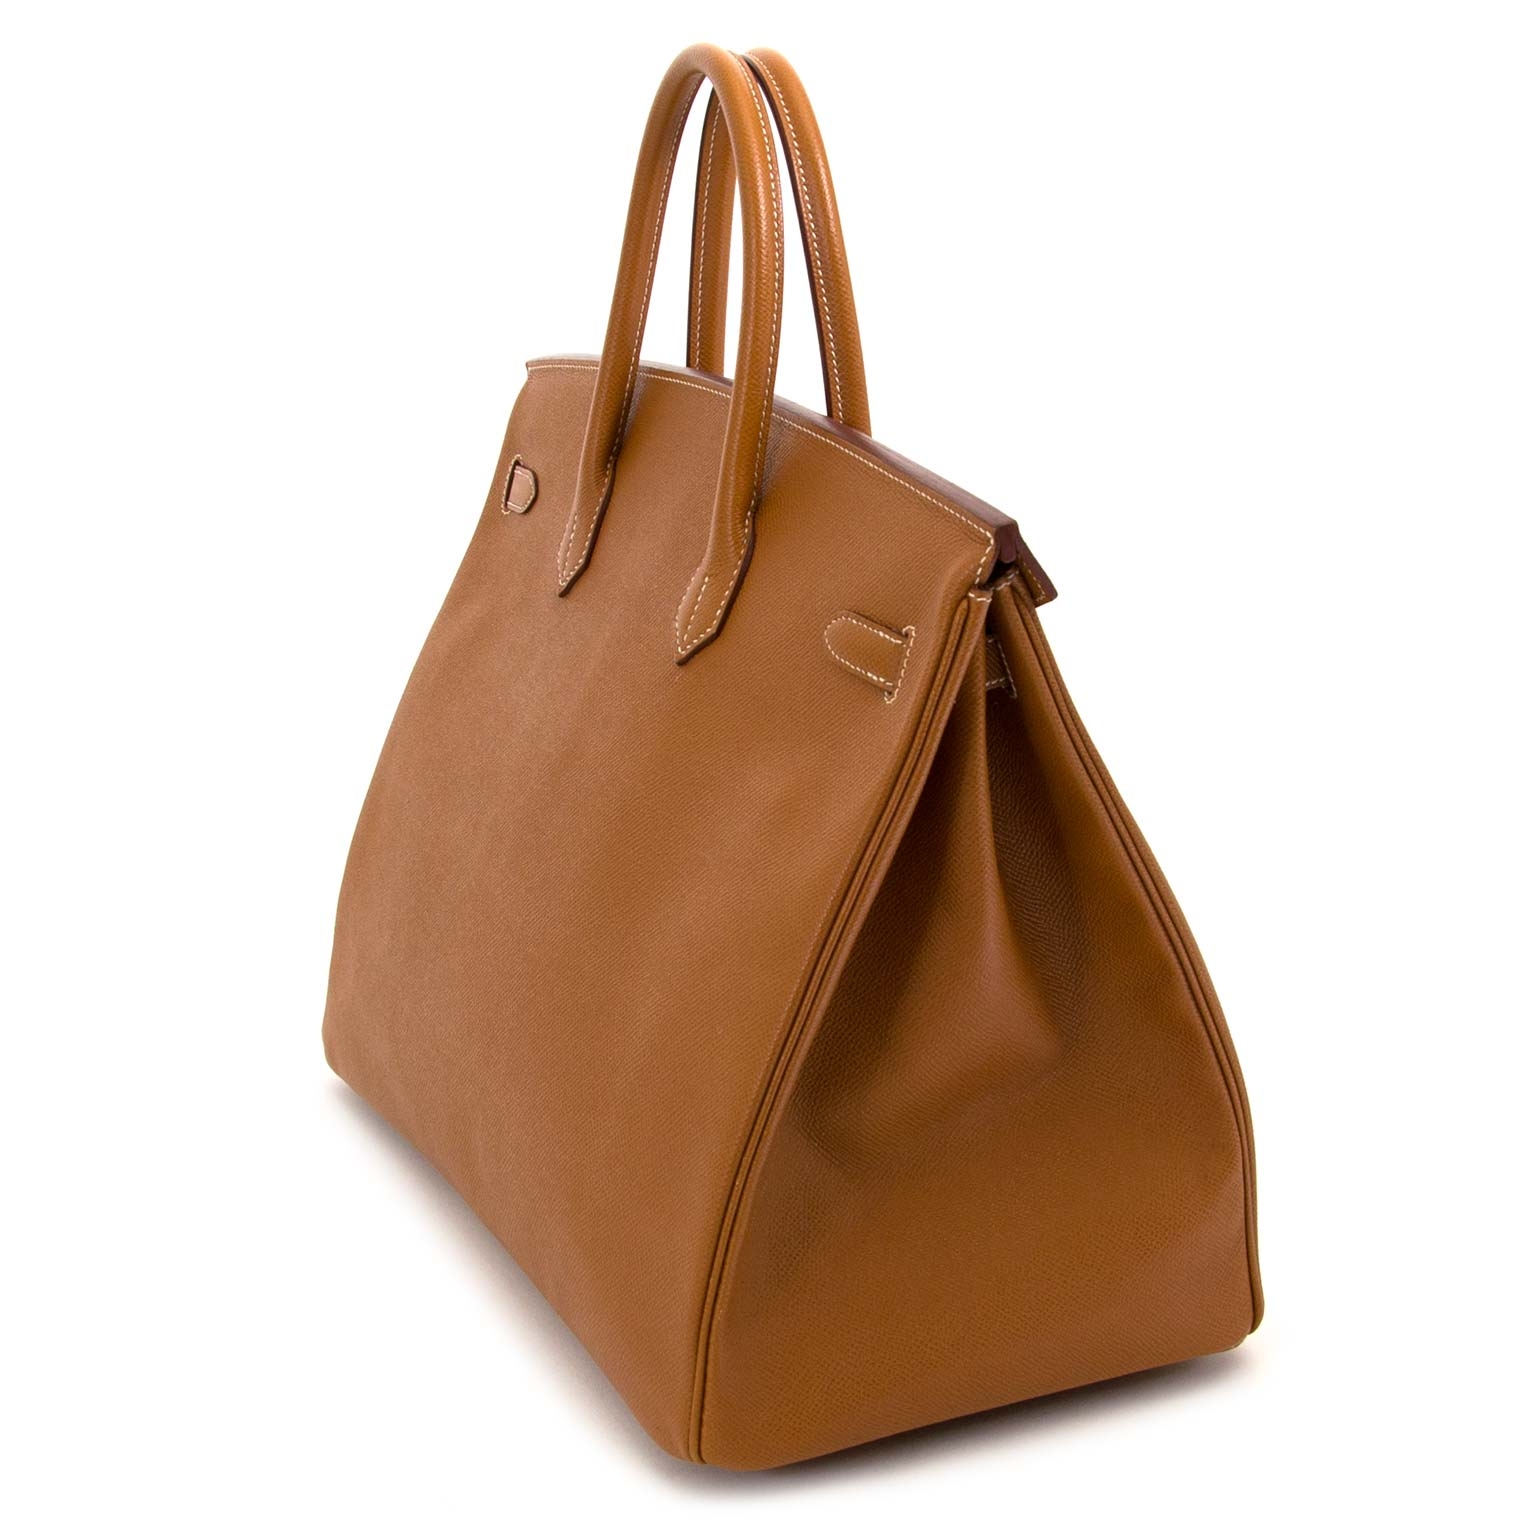 Hermès - Authenticated Birkin 40 Handbag - Leather Gold Plain for Women, Very Good Condition